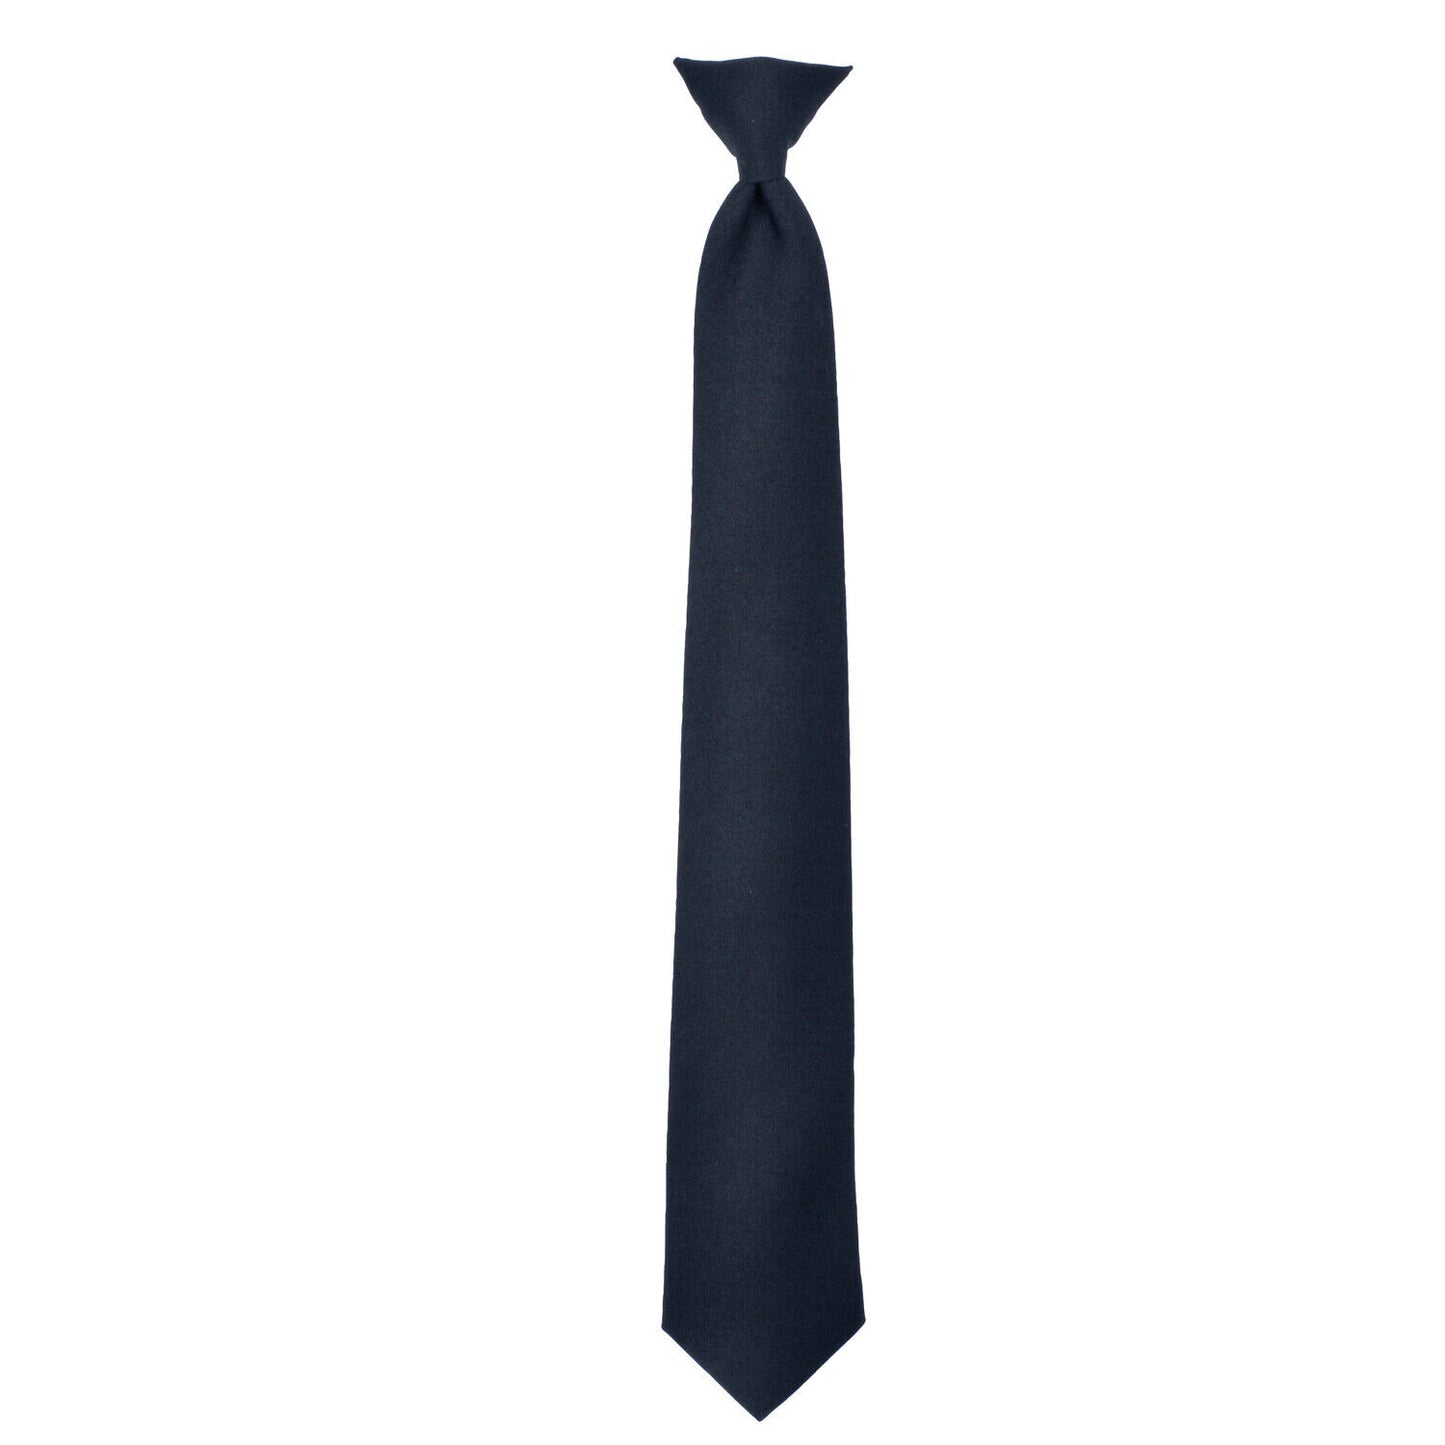 16 Inch Clip-On Neckties